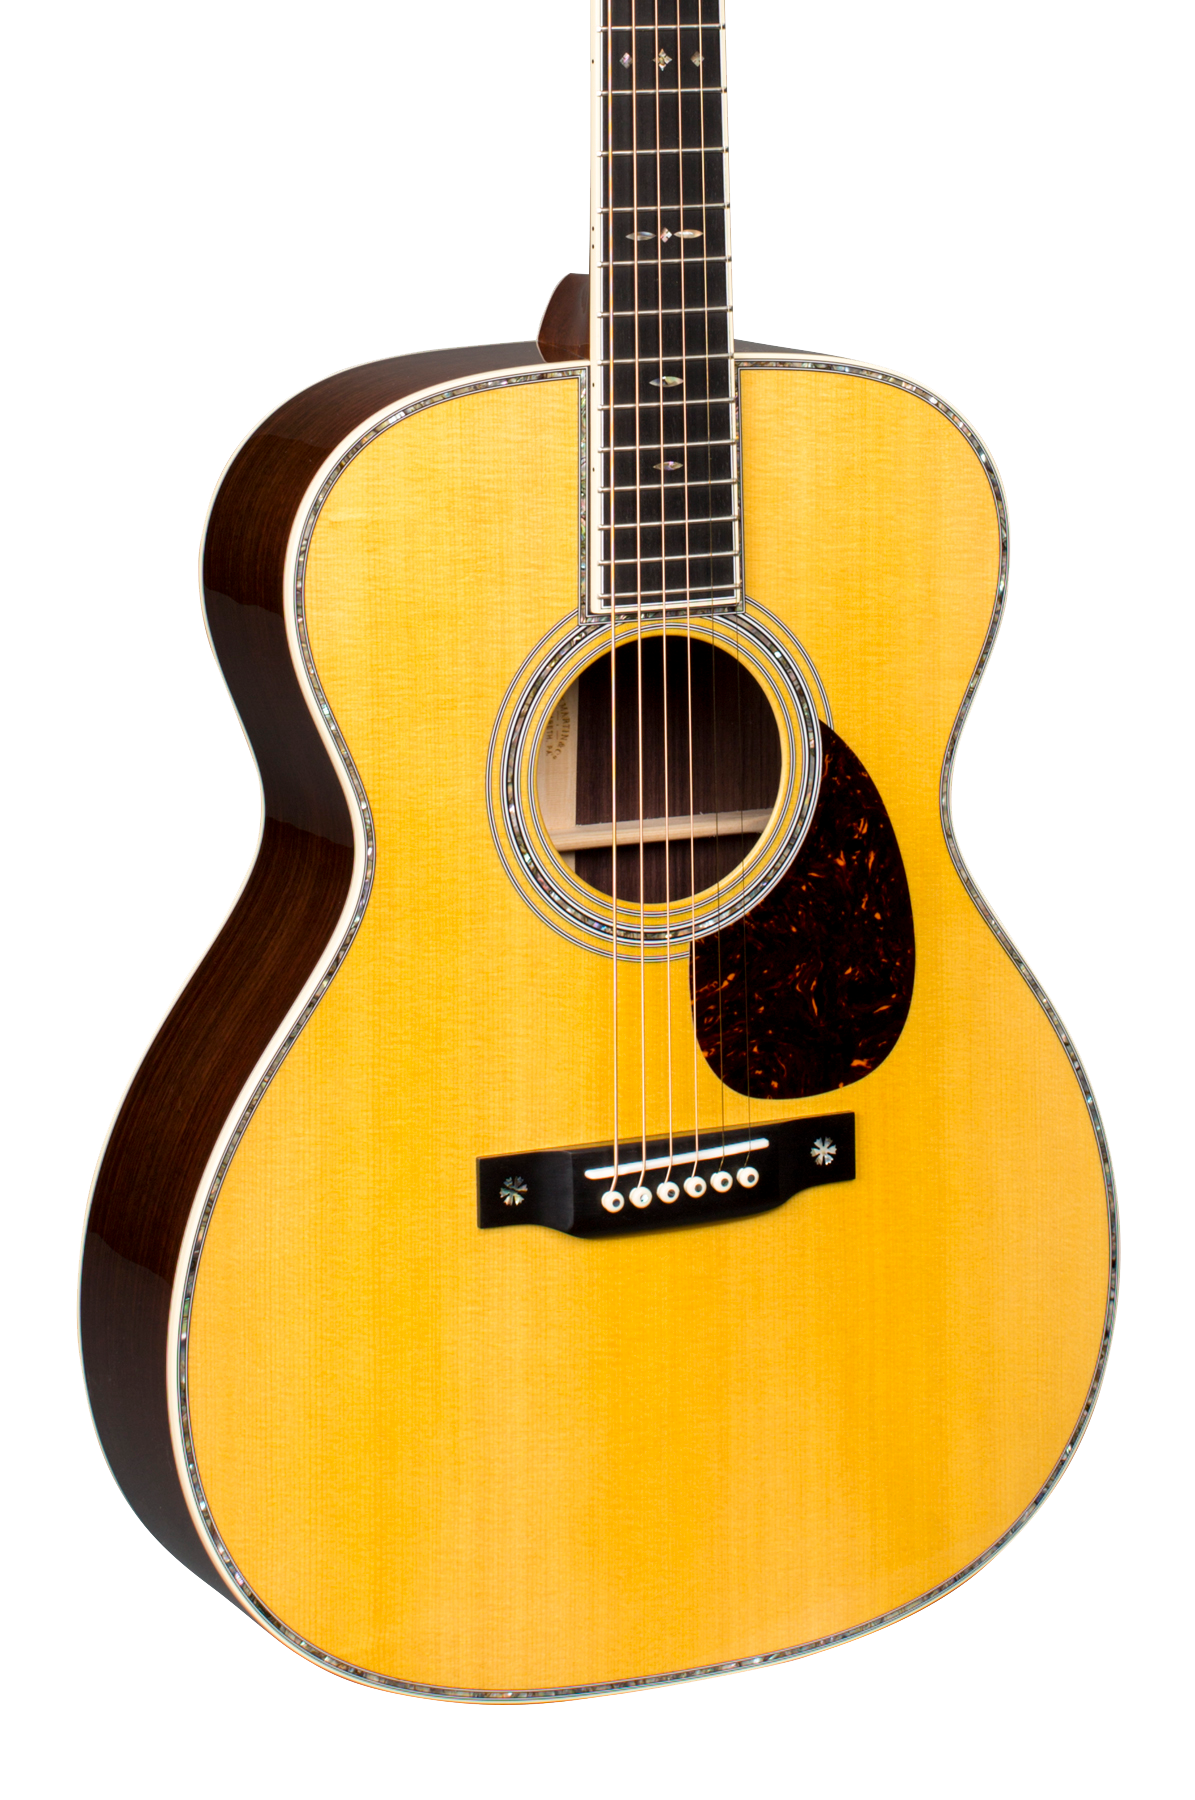 Martin OM-42 Acoustic Guitar body Tone Shop Guitars Dallas Fort Worth